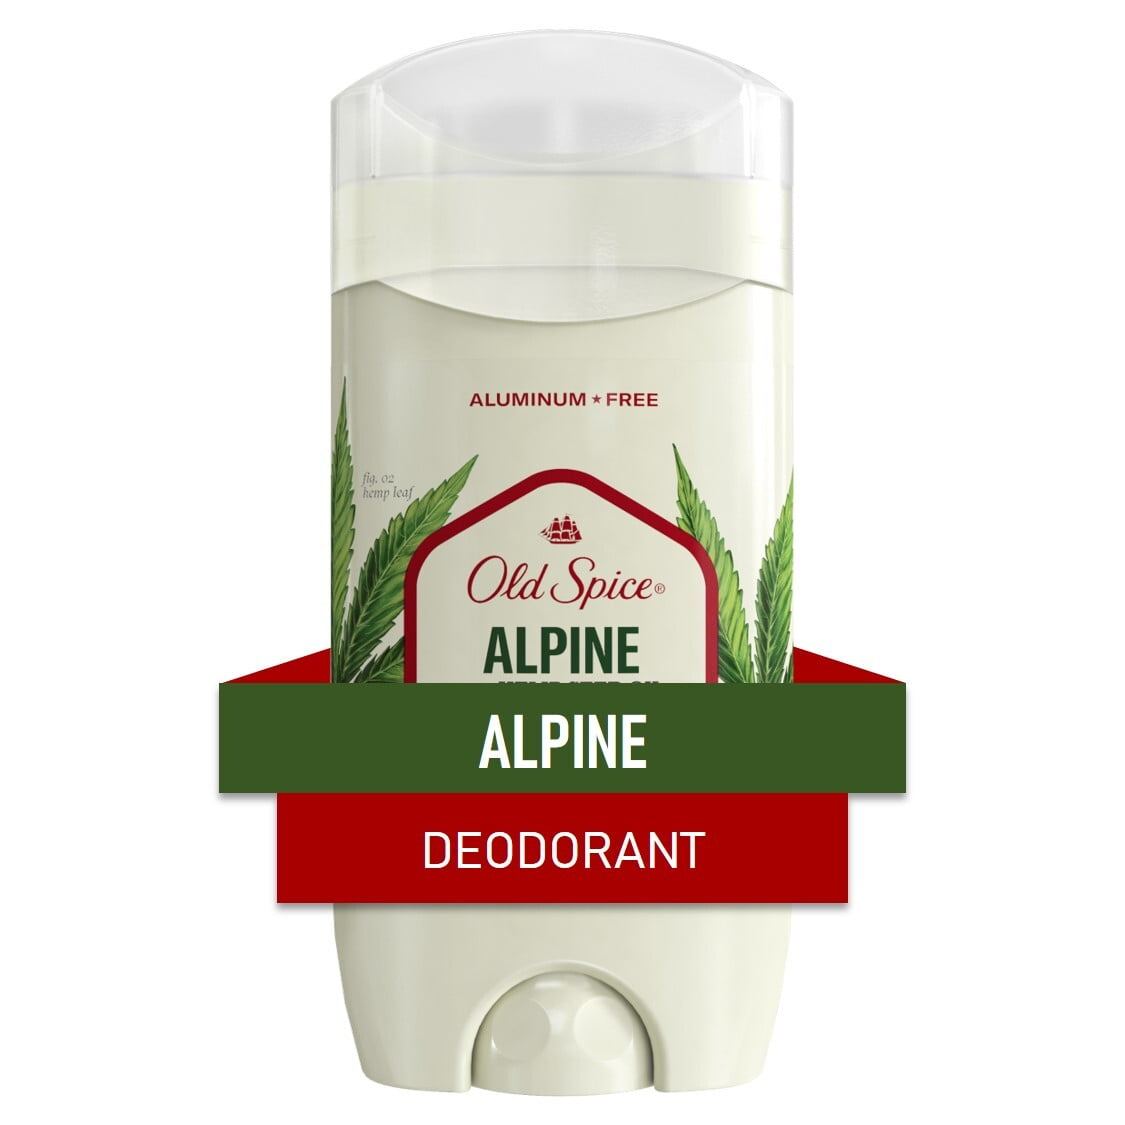 Old Spice Men's Deodorant Alpine with Hemp Oil, Aluminum-Free, 3 oz